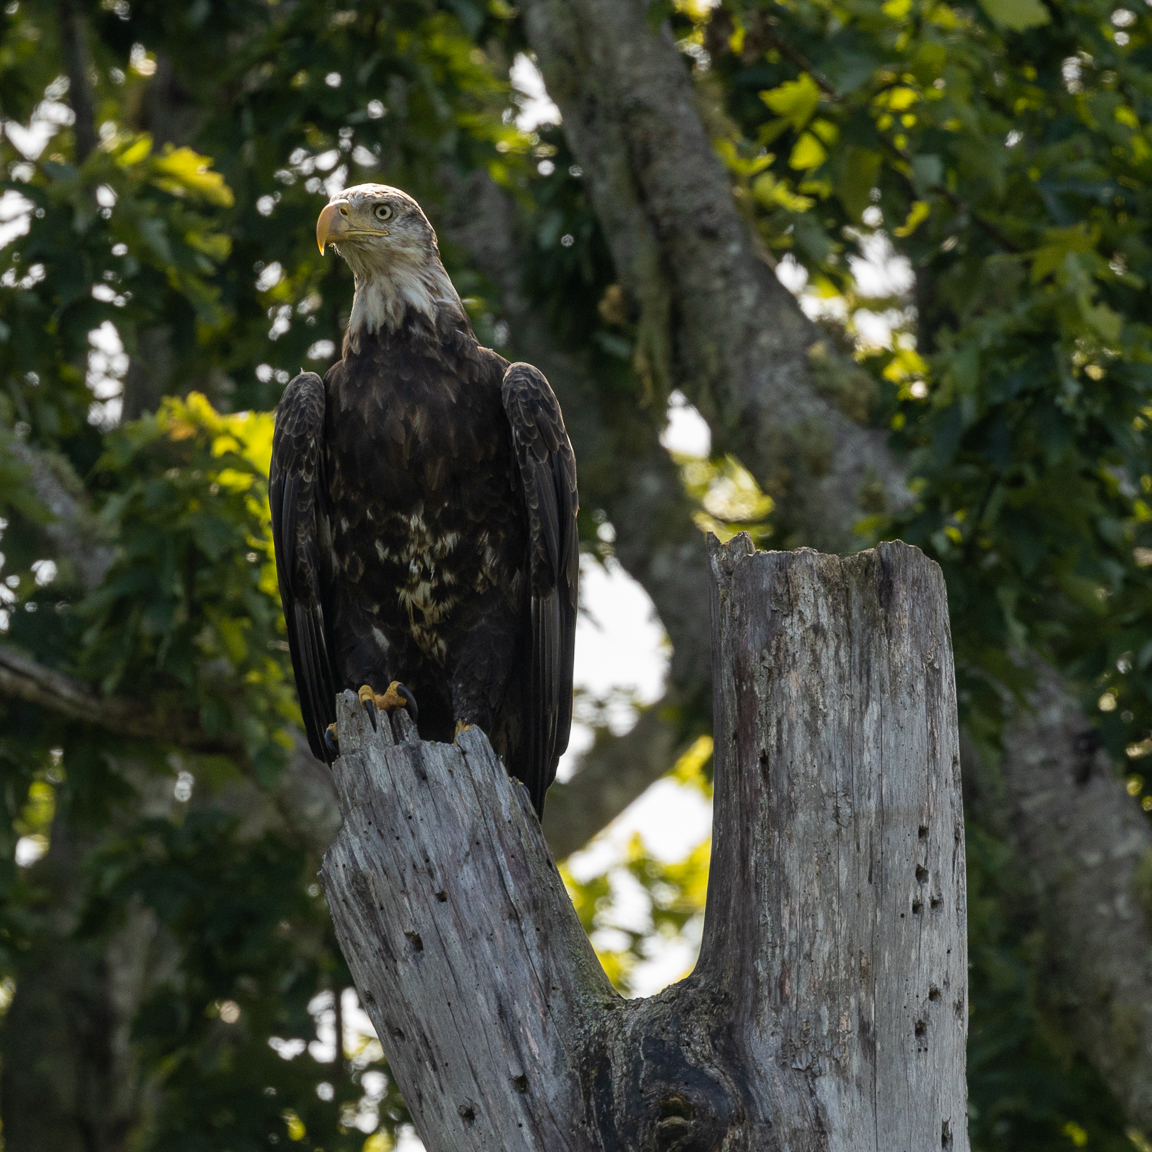 A bald eagle along the Nerepis River